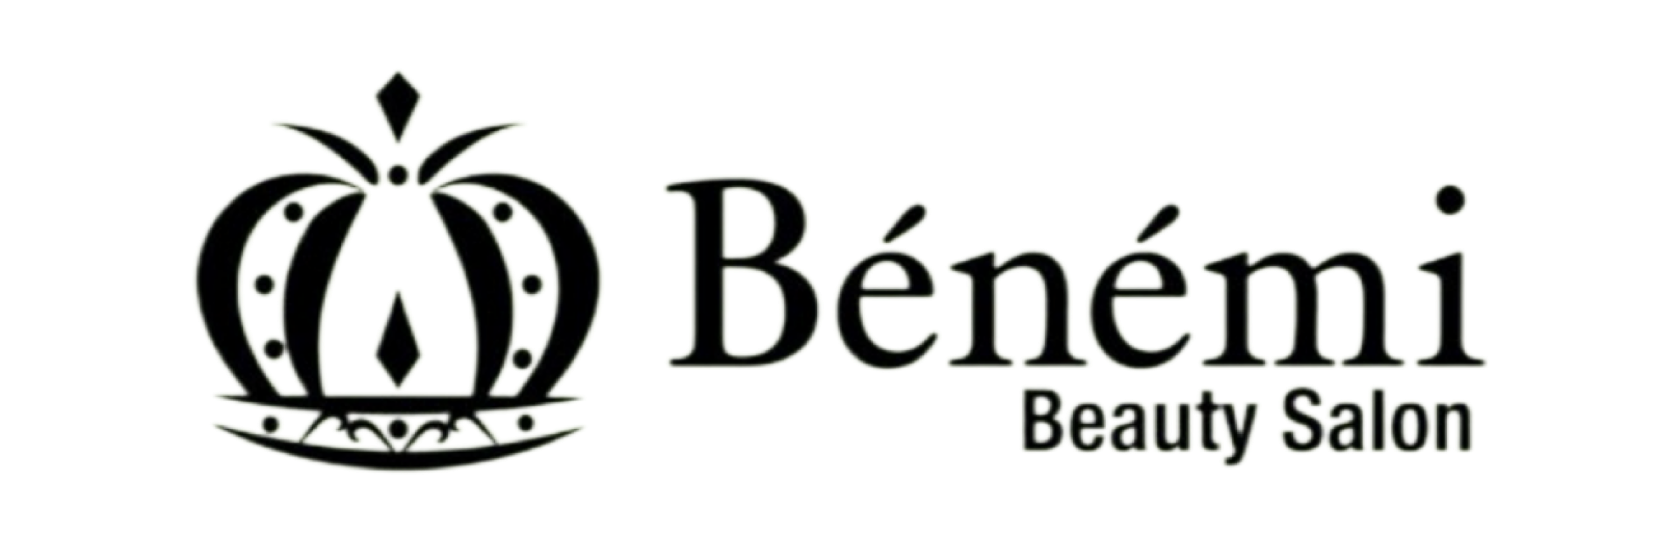 Benemi beauty salon